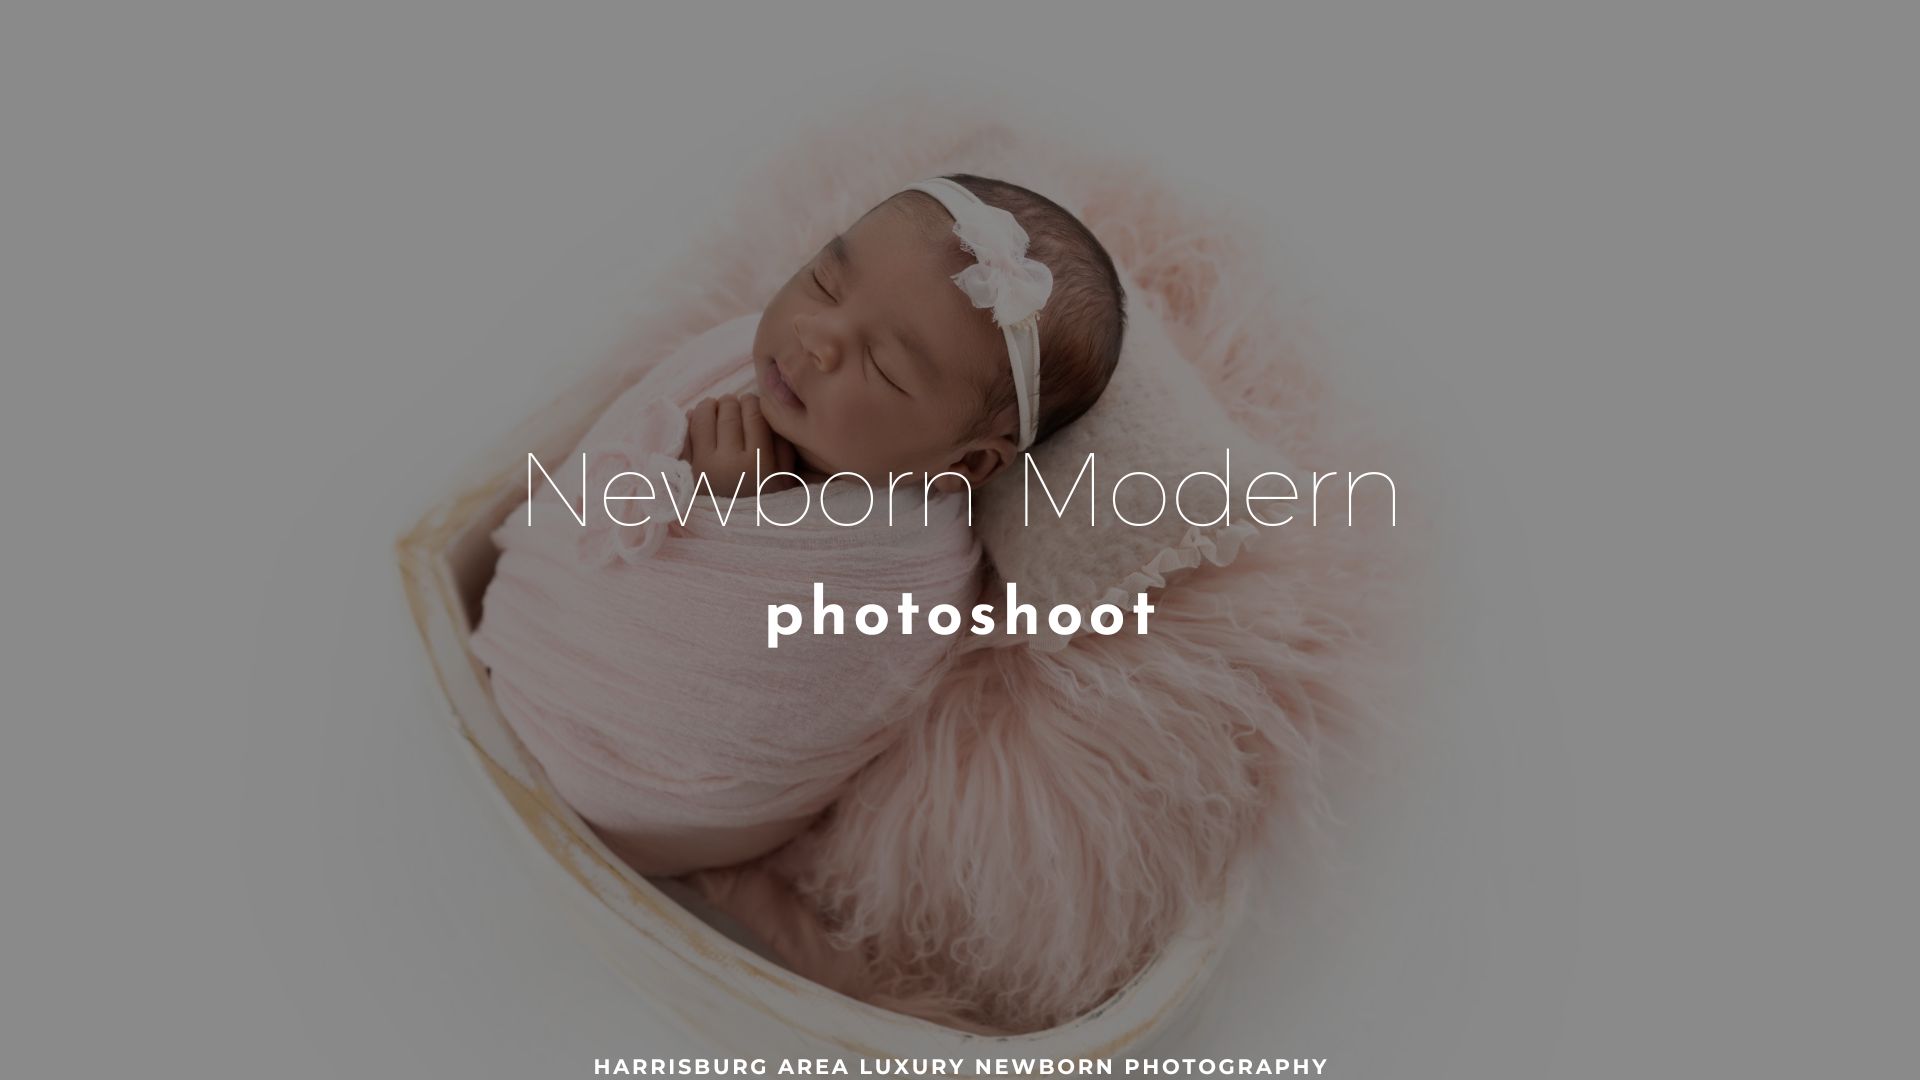 newborn modern photoshoot featured blog